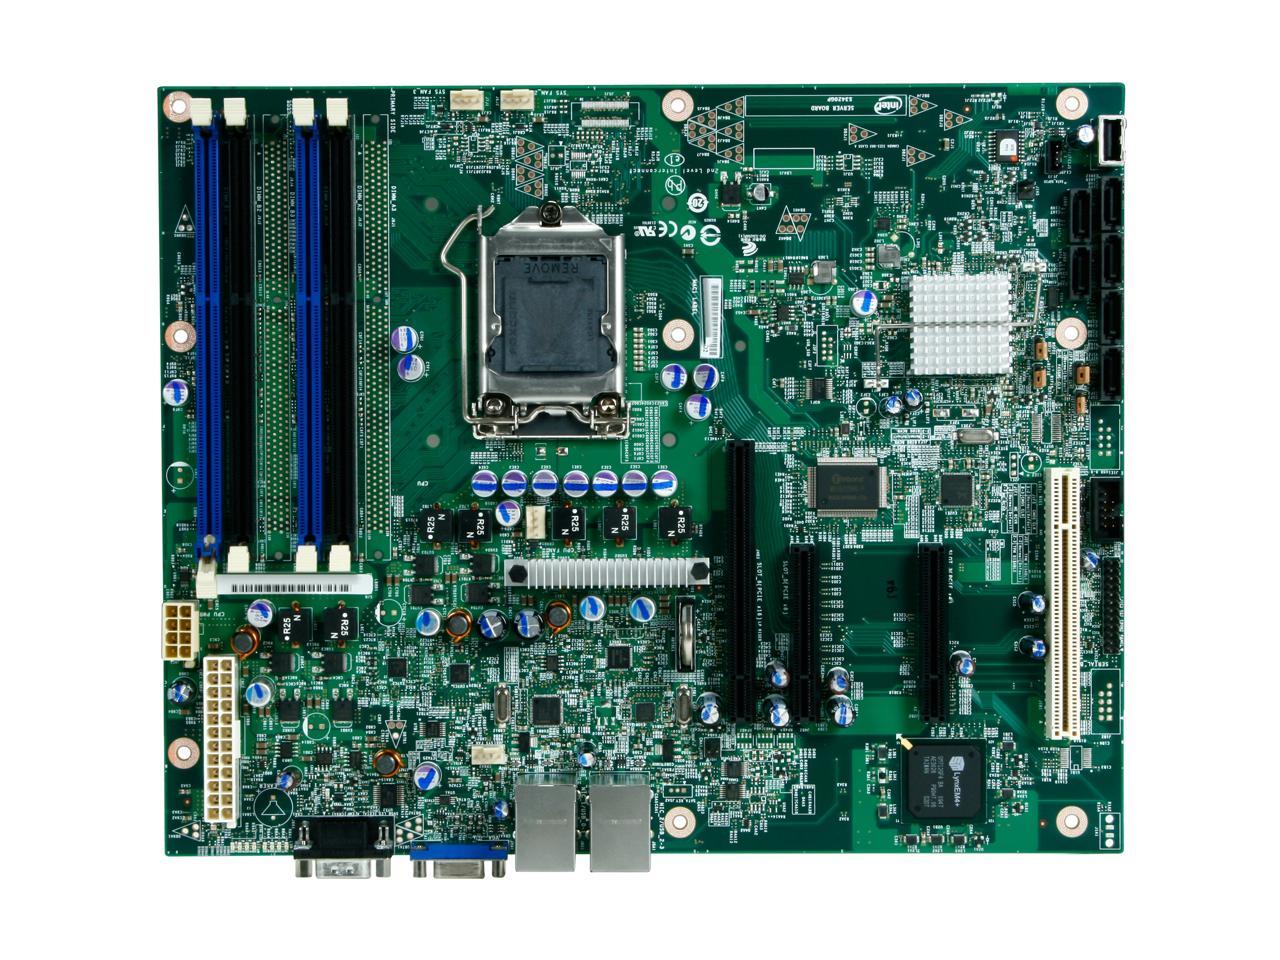 Intel S3420GPV ATX Server Motherboard - Newegg.com